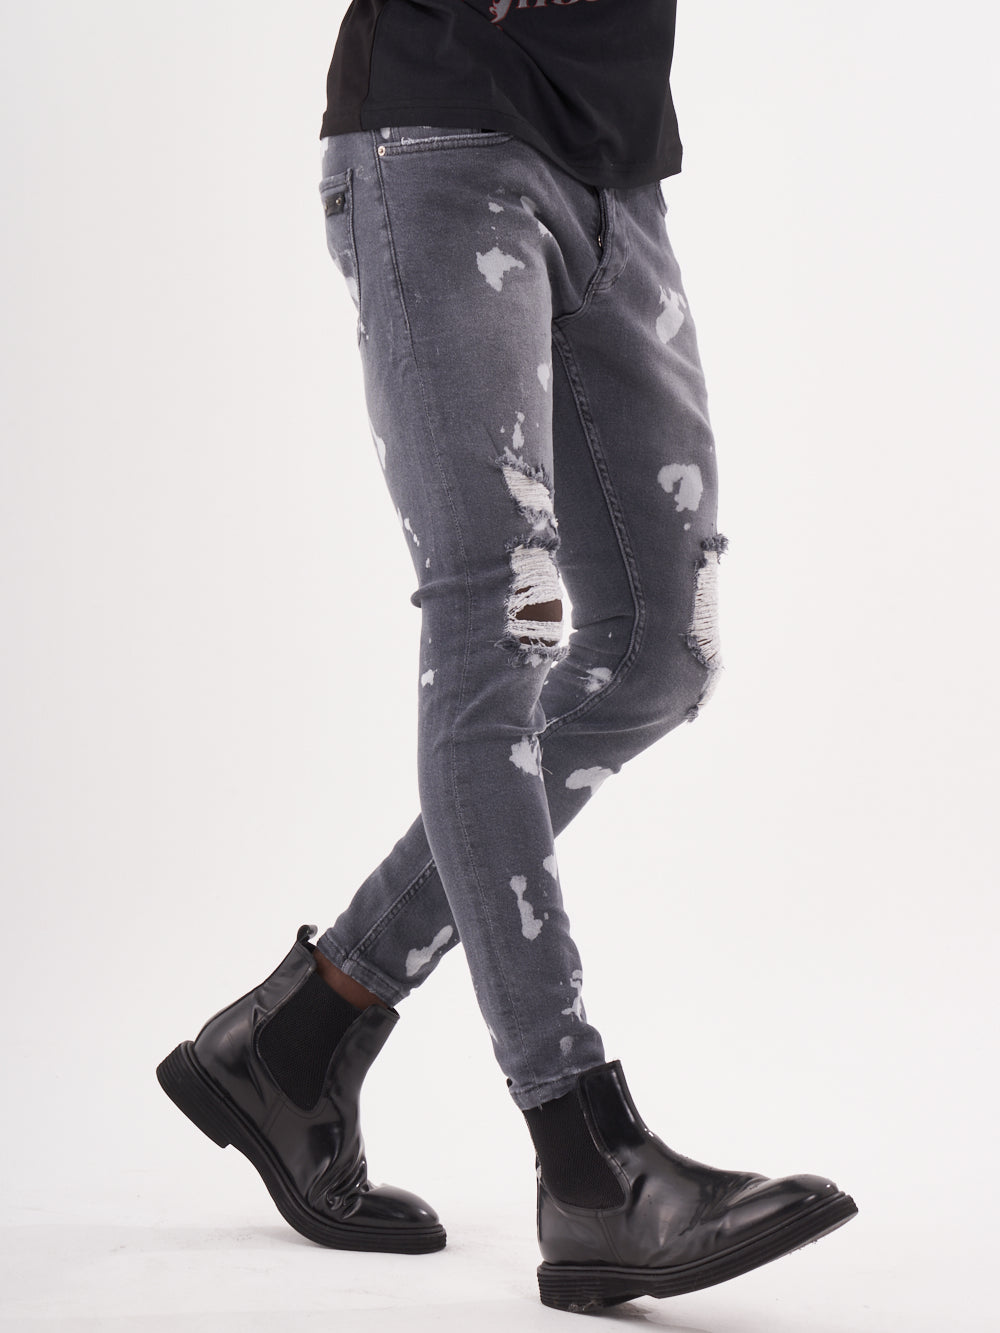 A man wearing grey ripped MAVERICK jeans and black MAVERICK boots.